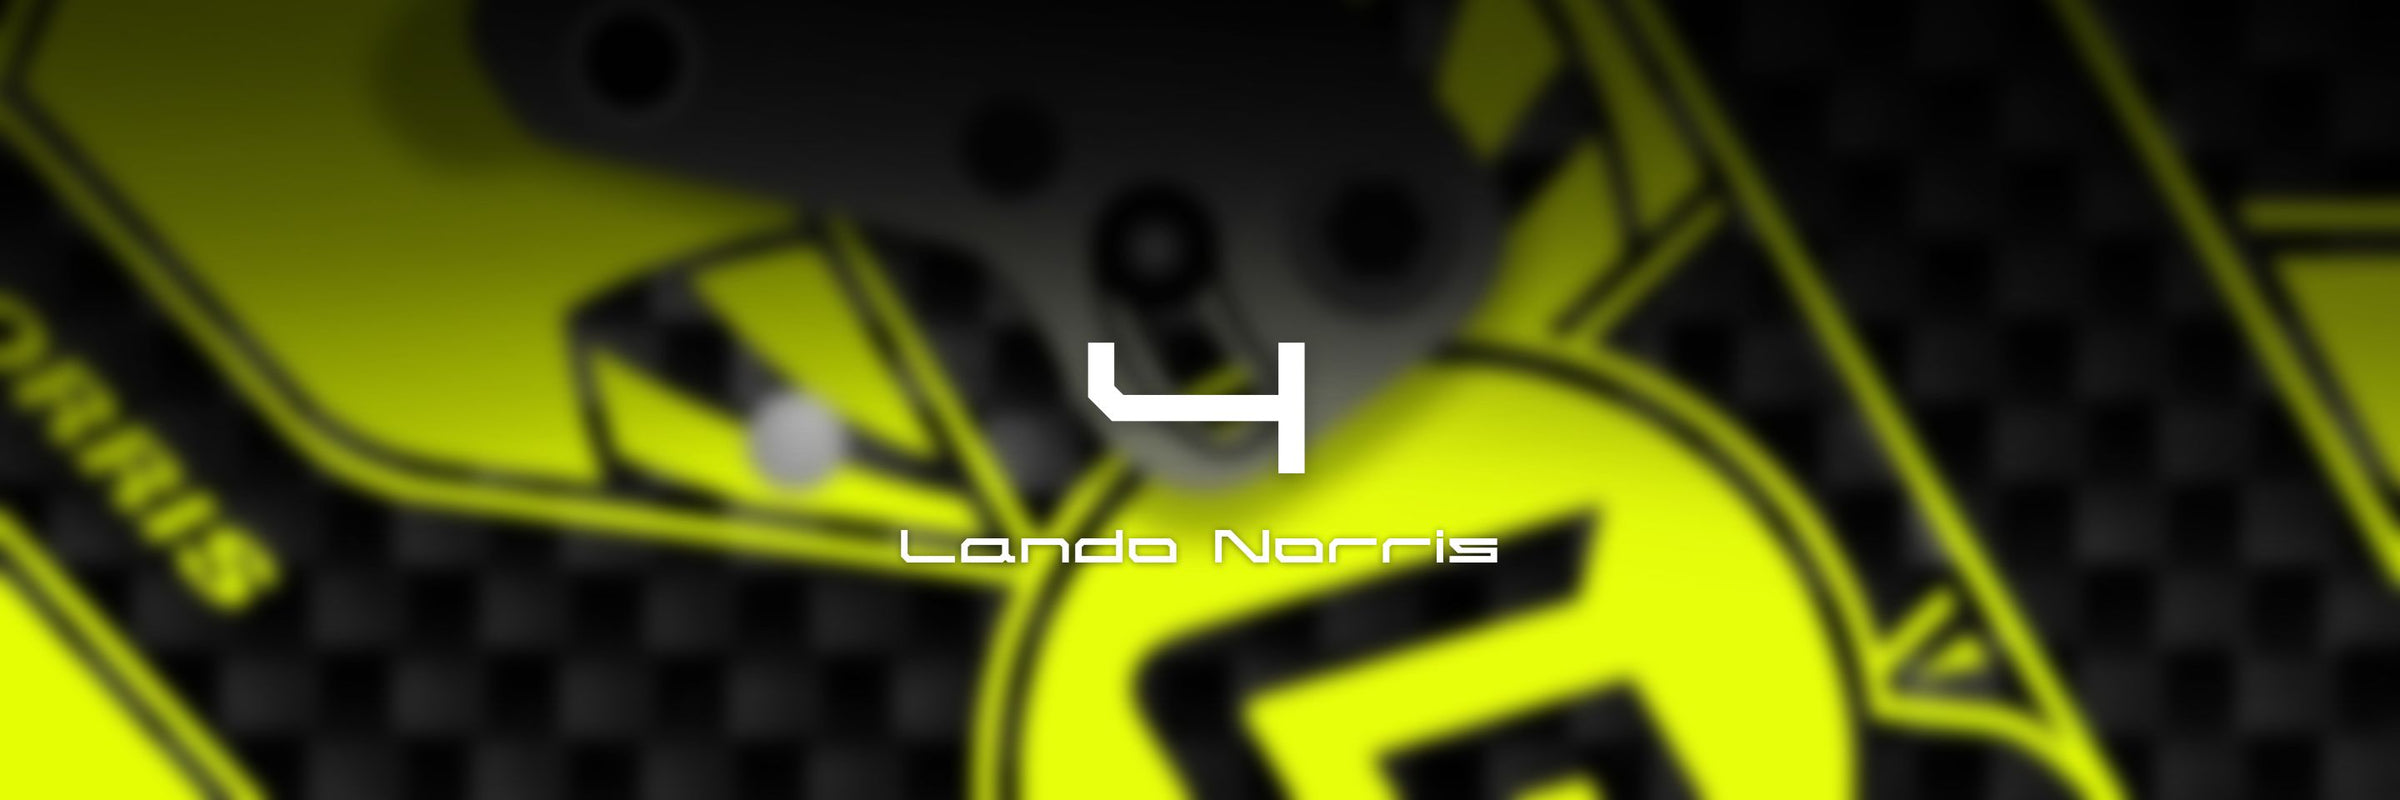 Lando Norris - F1 and Motorpsort Offficial Merchandise - Fueler store